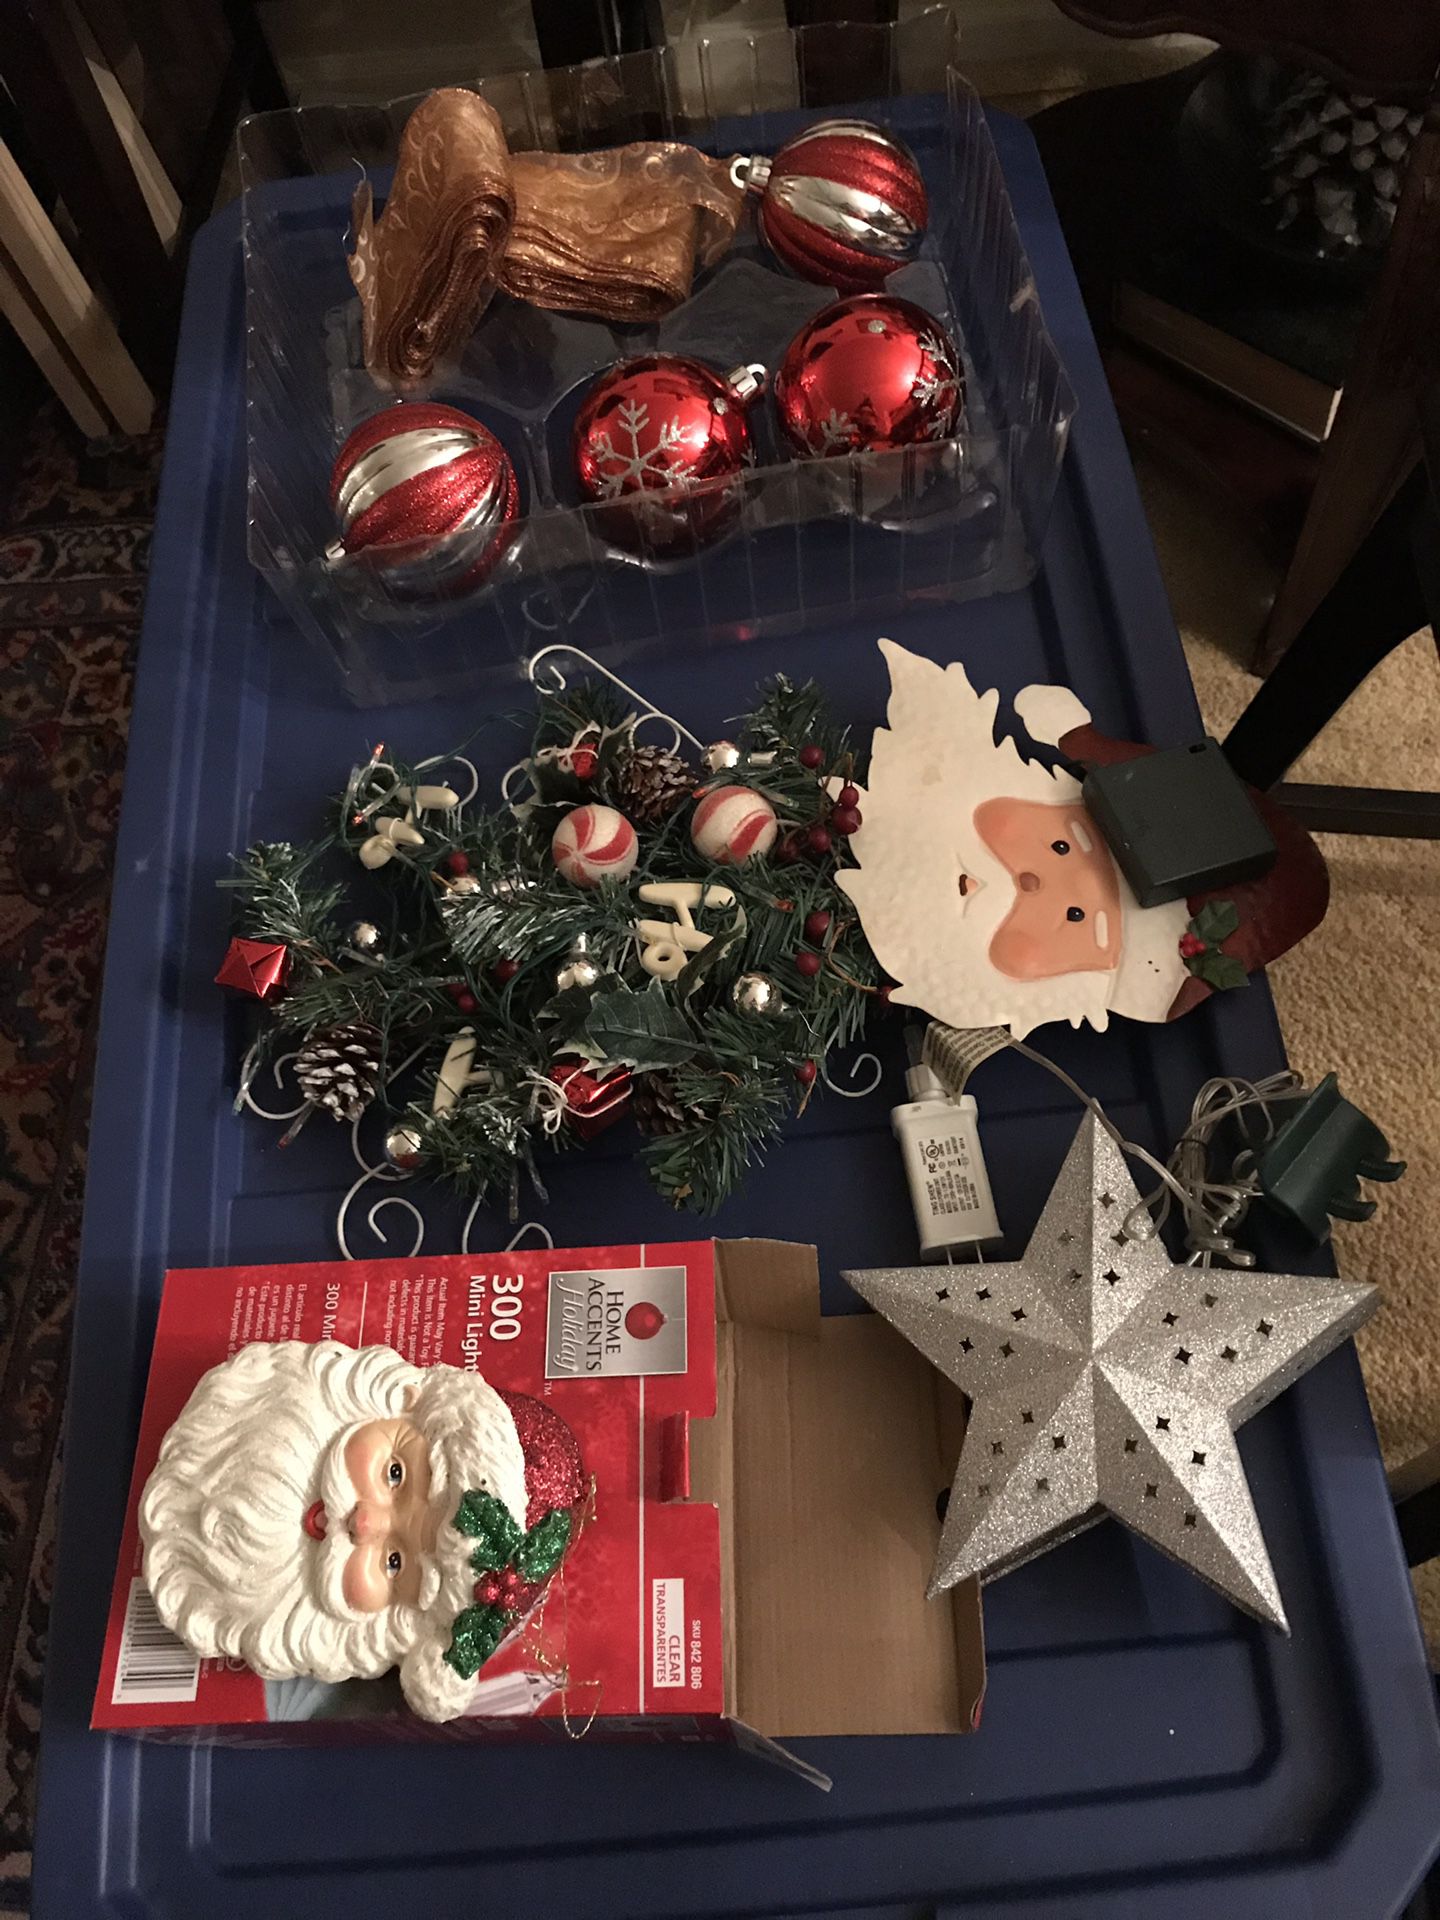 Free Christmas ornaments